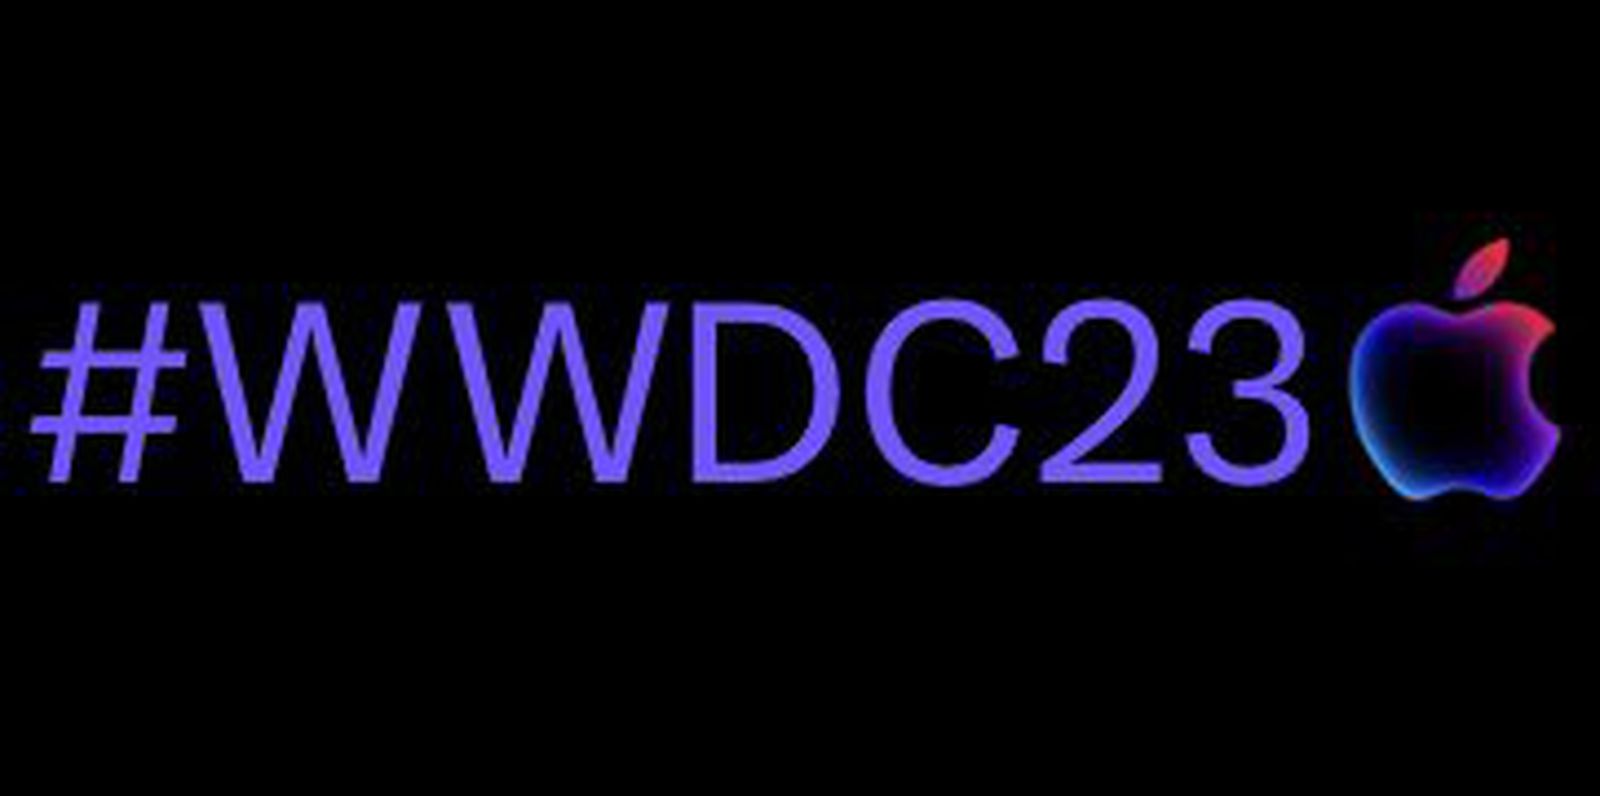 Apple's WWDC 2023 Hashflag Now Live on Twitter Ahead of Next Week's Keynote - macrumors.com